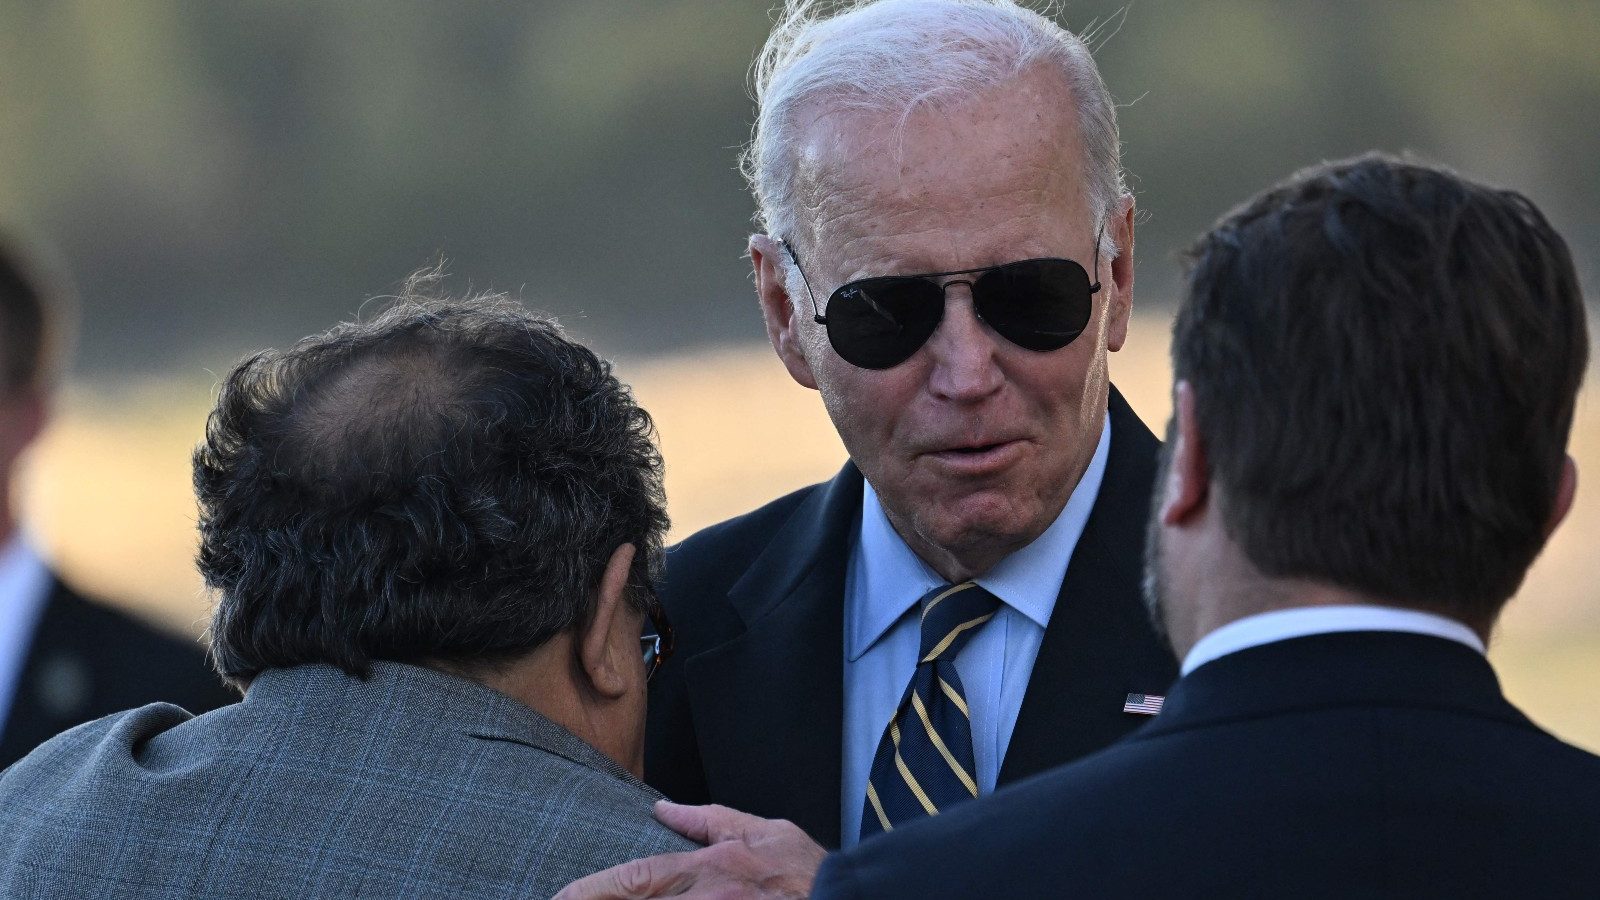 Biden, hug sunglasses